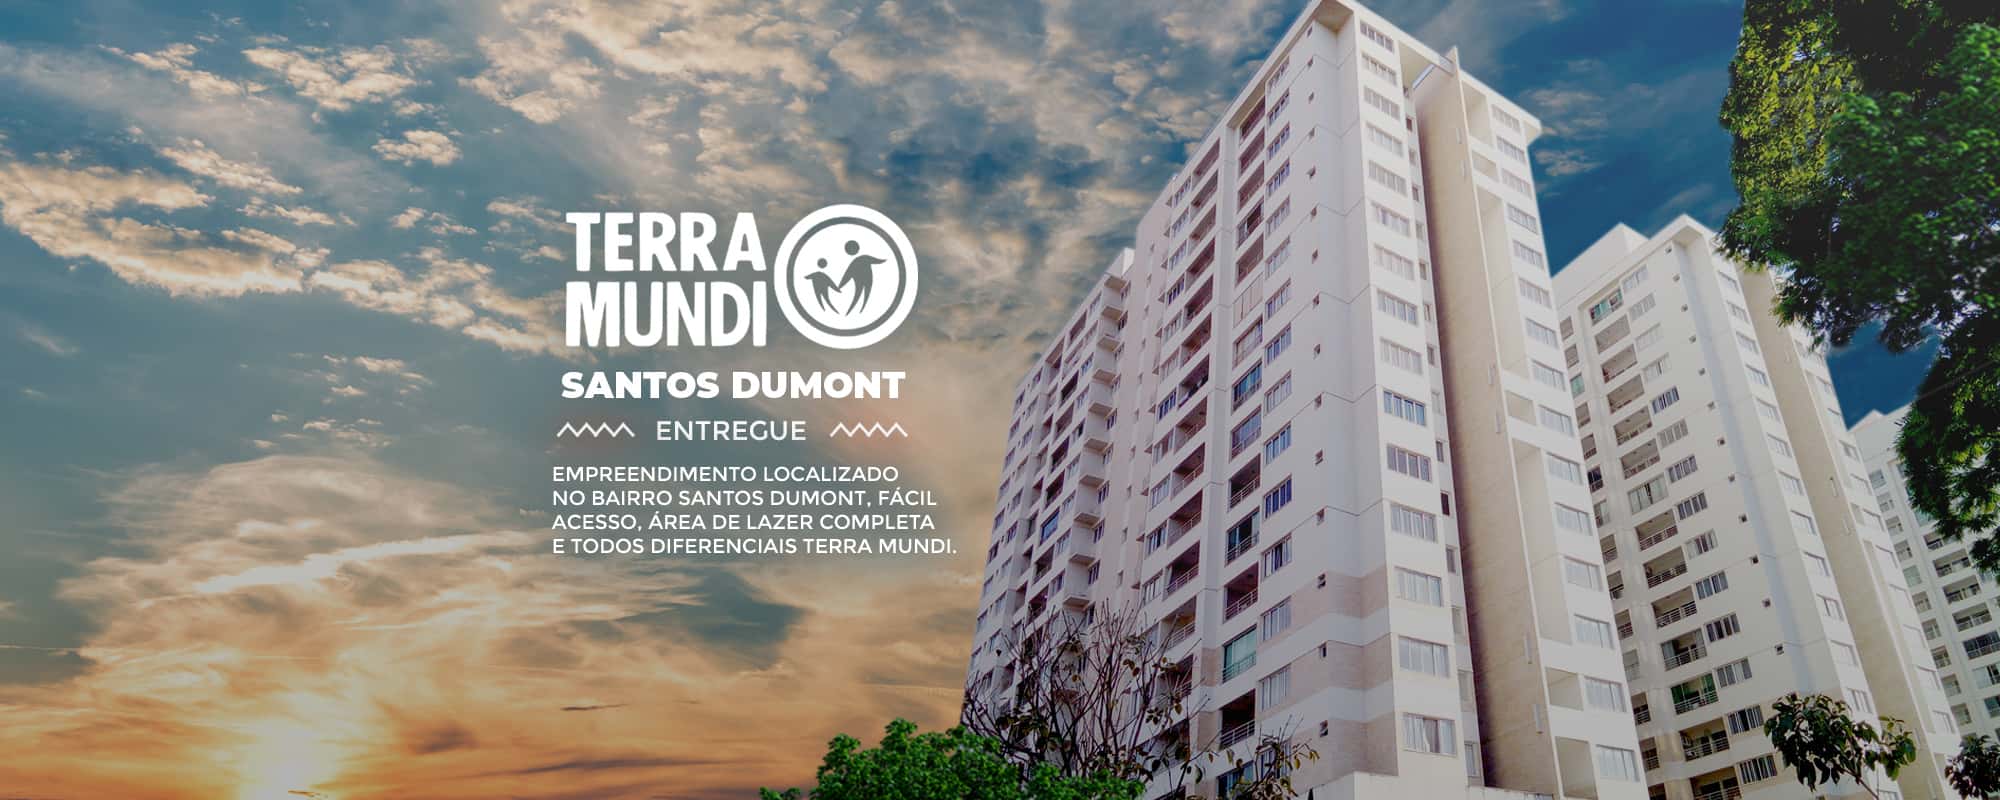 Apartamento Terra Mundi Santos Dumont - Construtora Newinc